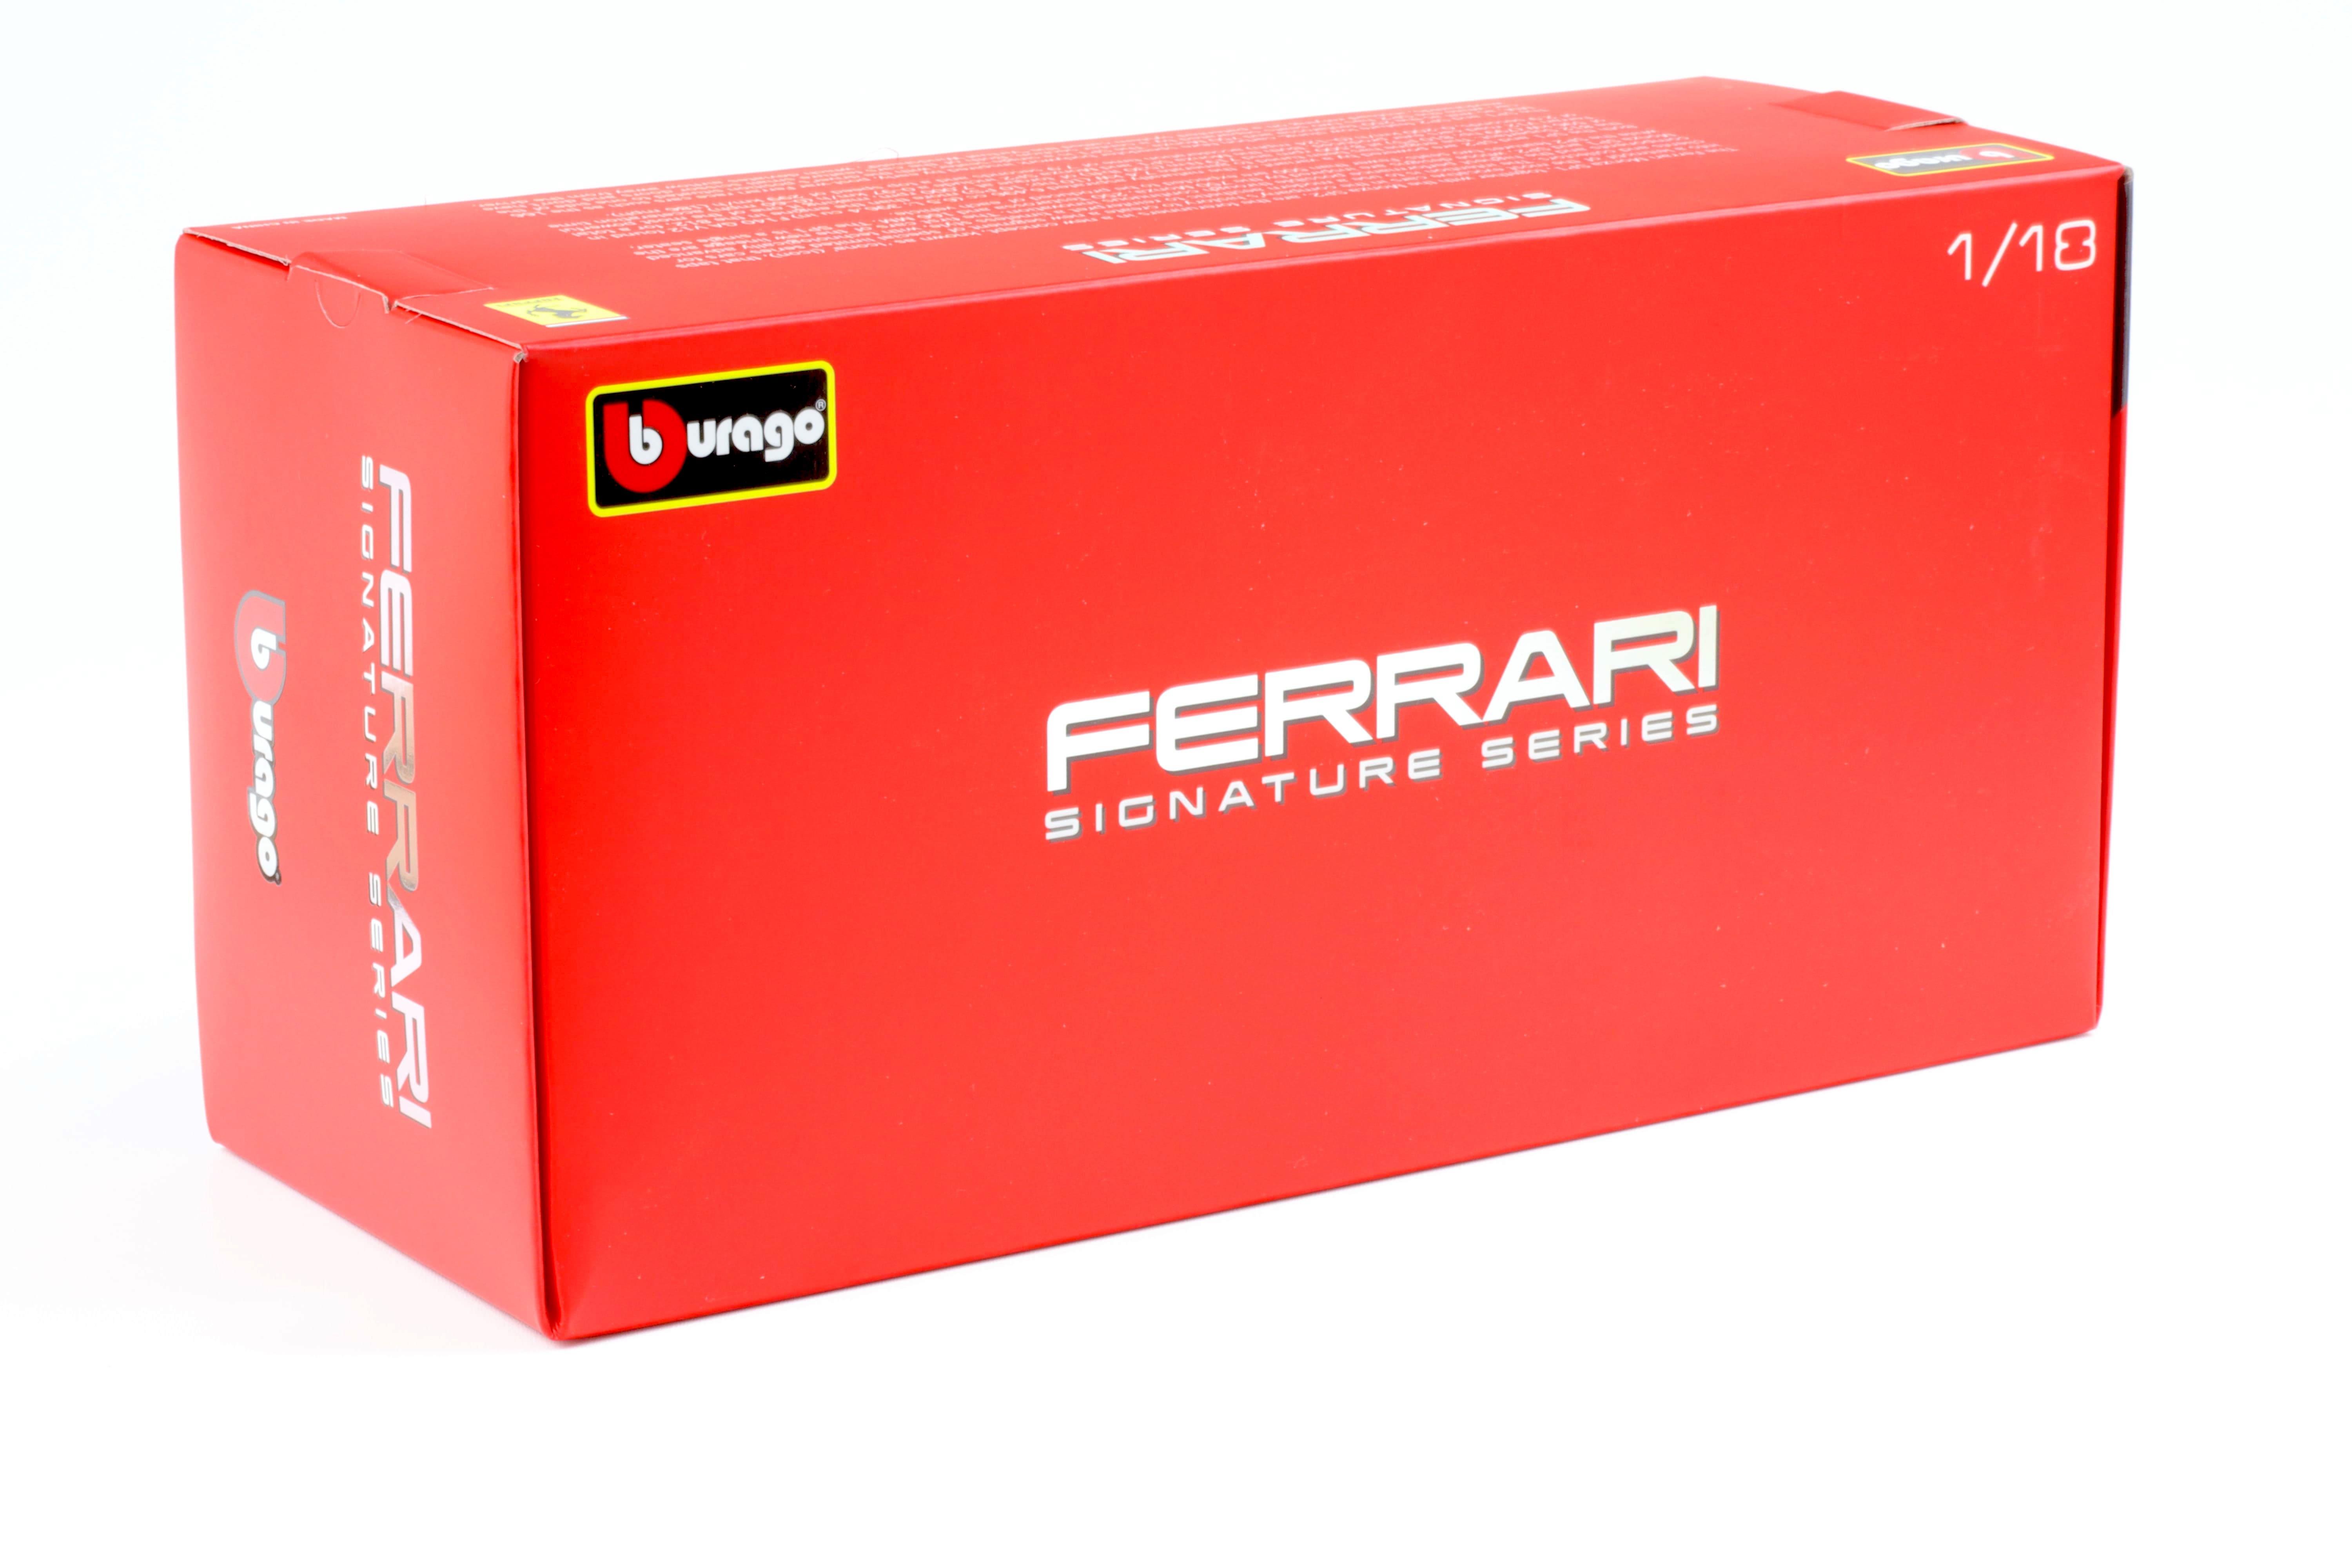 1:18 Bburago Signature Ferrari LaFerrari matt black 2013